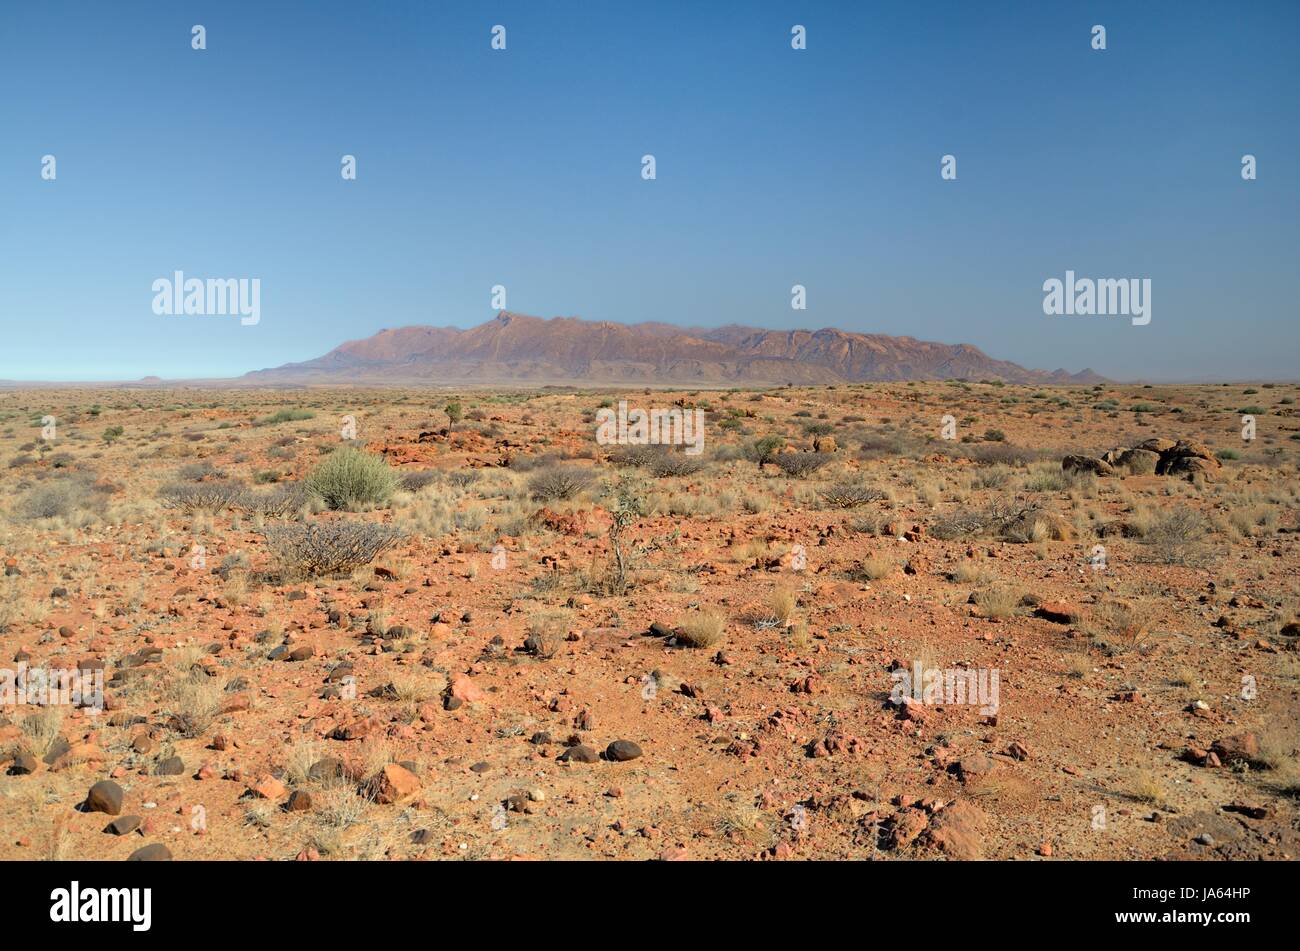 africa, namibia, nature, desert, wasteland, africa, namibia, width, dryness, Stock Photo